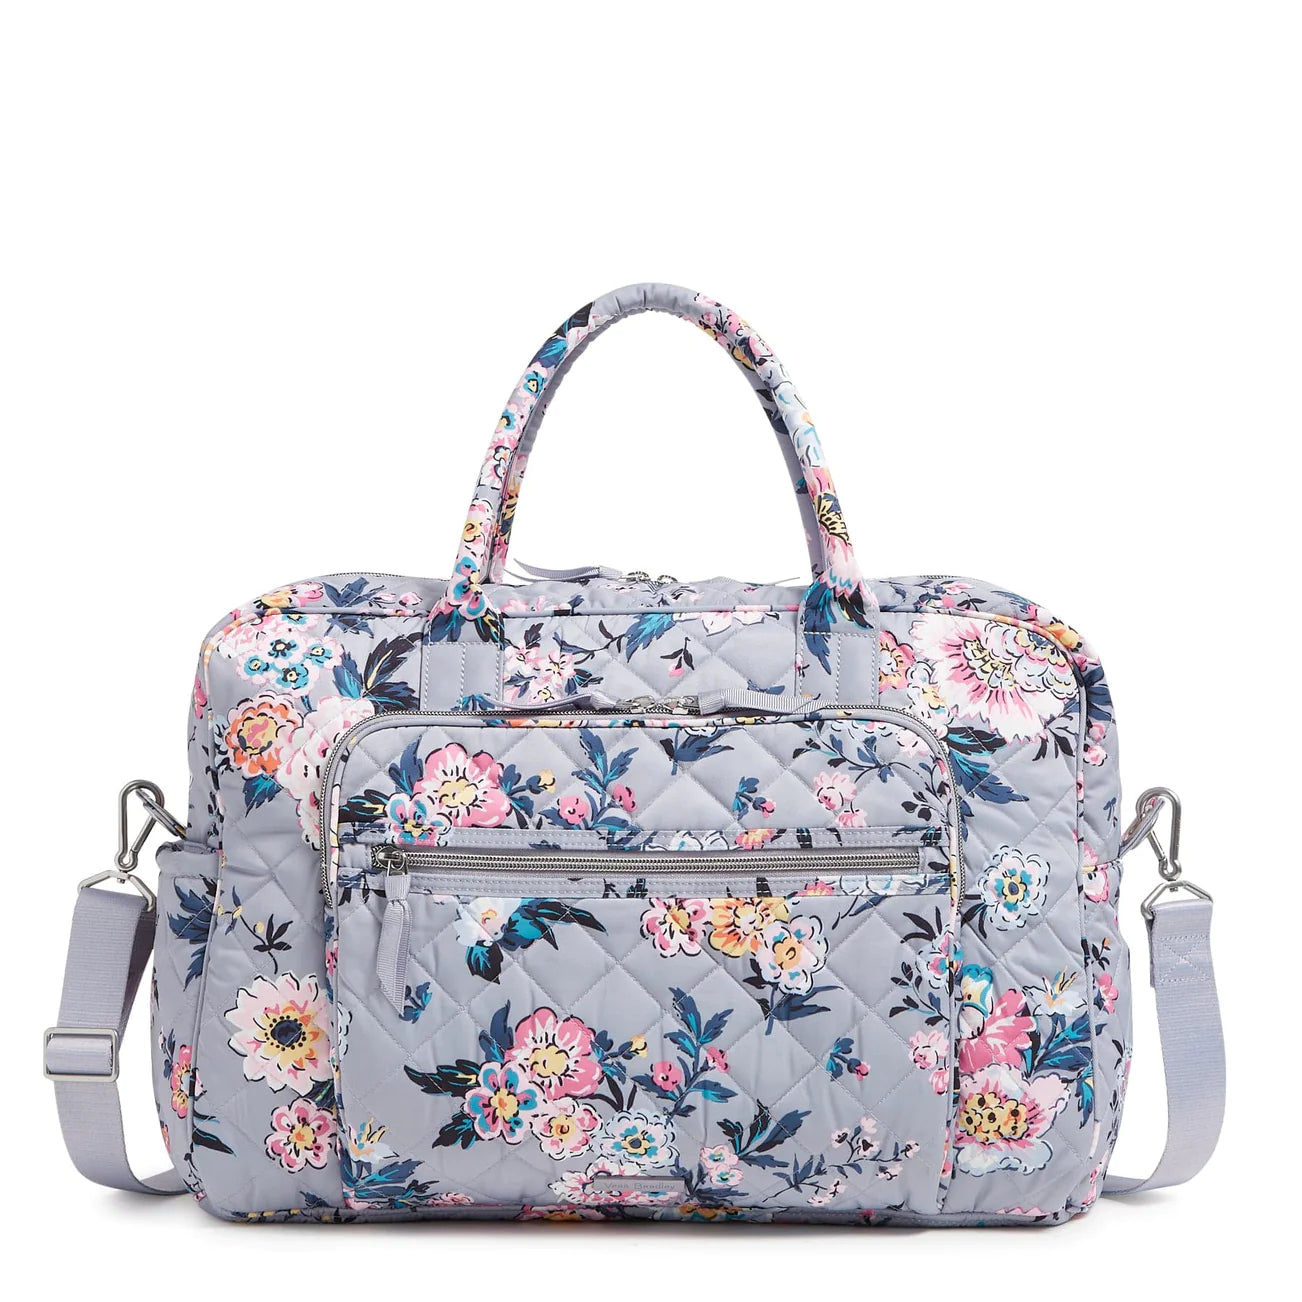 Vera Bradley Weekender Travel Bag : Parisian Bouquet - Image 1